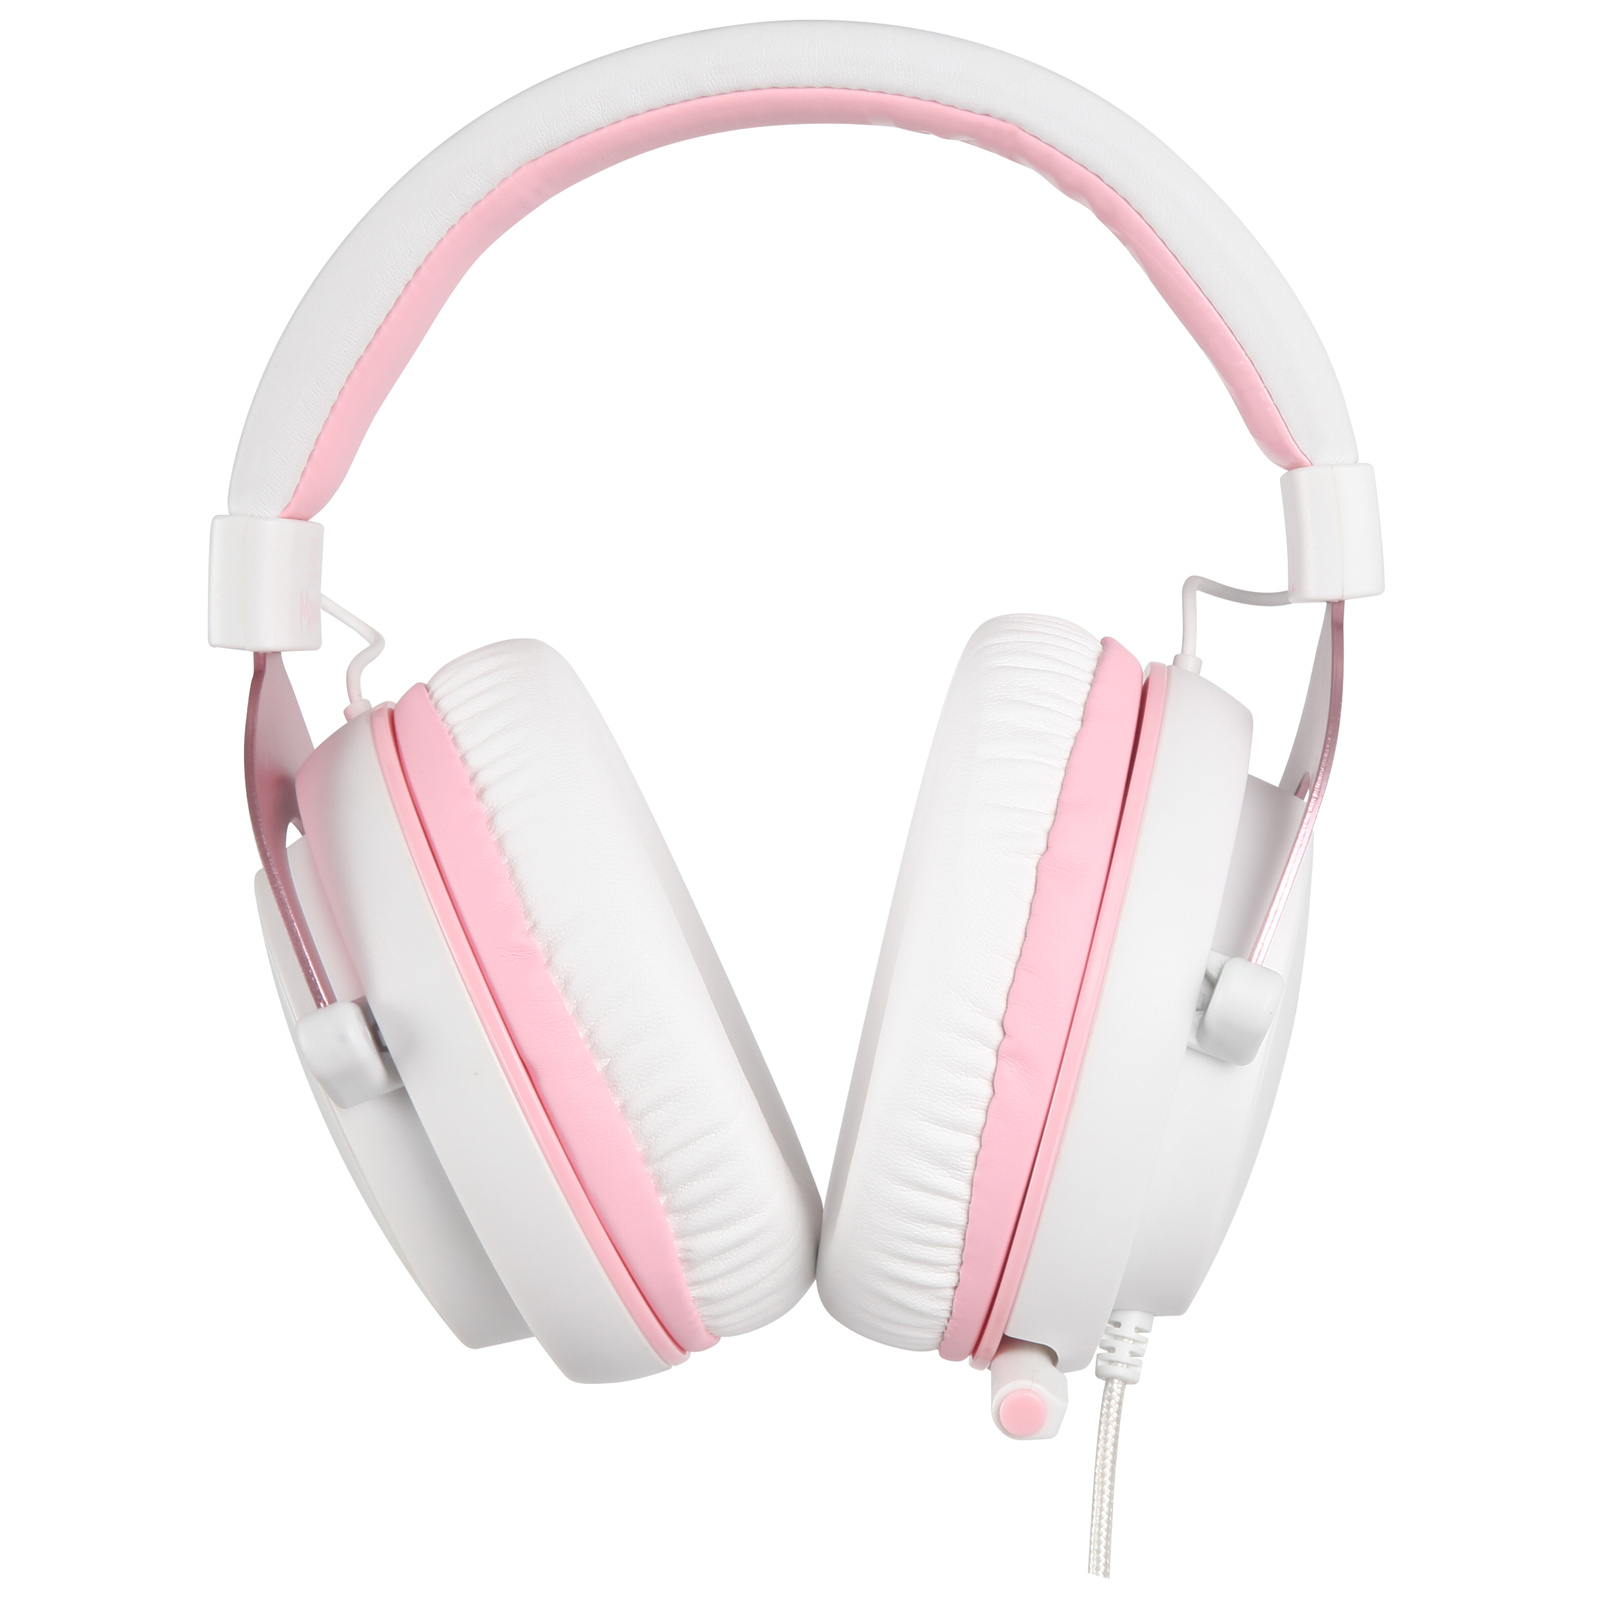 Buy the Sades M-Power Gaming Headset - Pink mPower ( SMGHP ) online -  PBTech.com